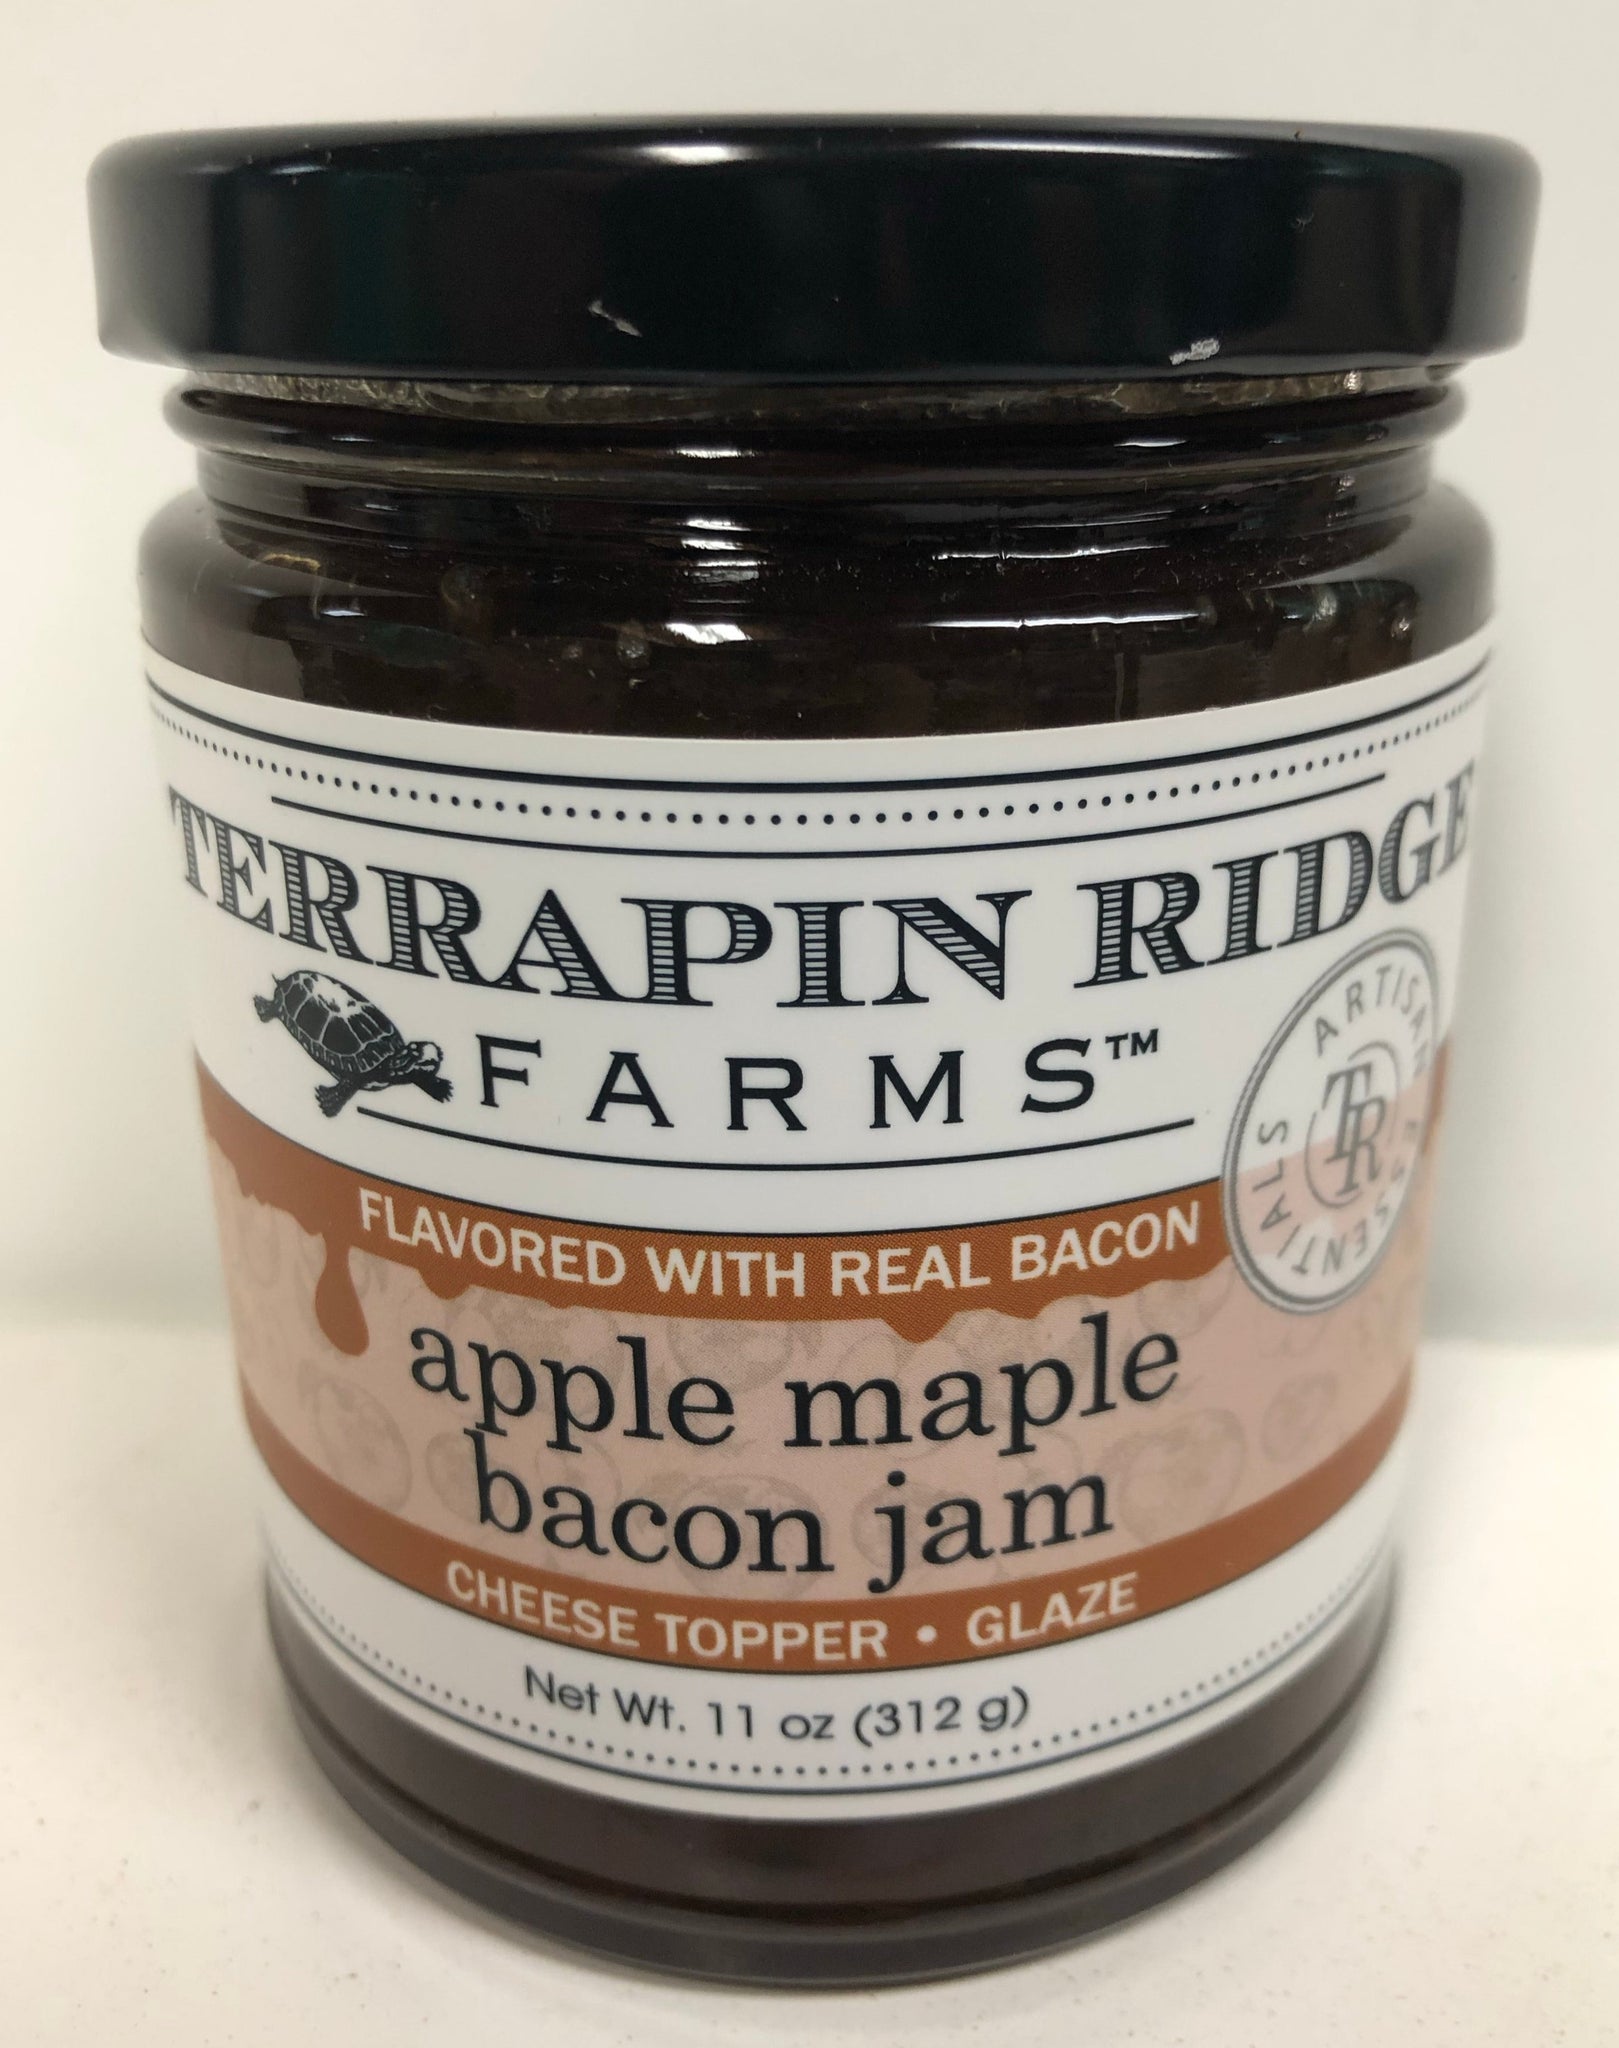 Apple Maple Bacon Jam from Terrapin Ridge Farms